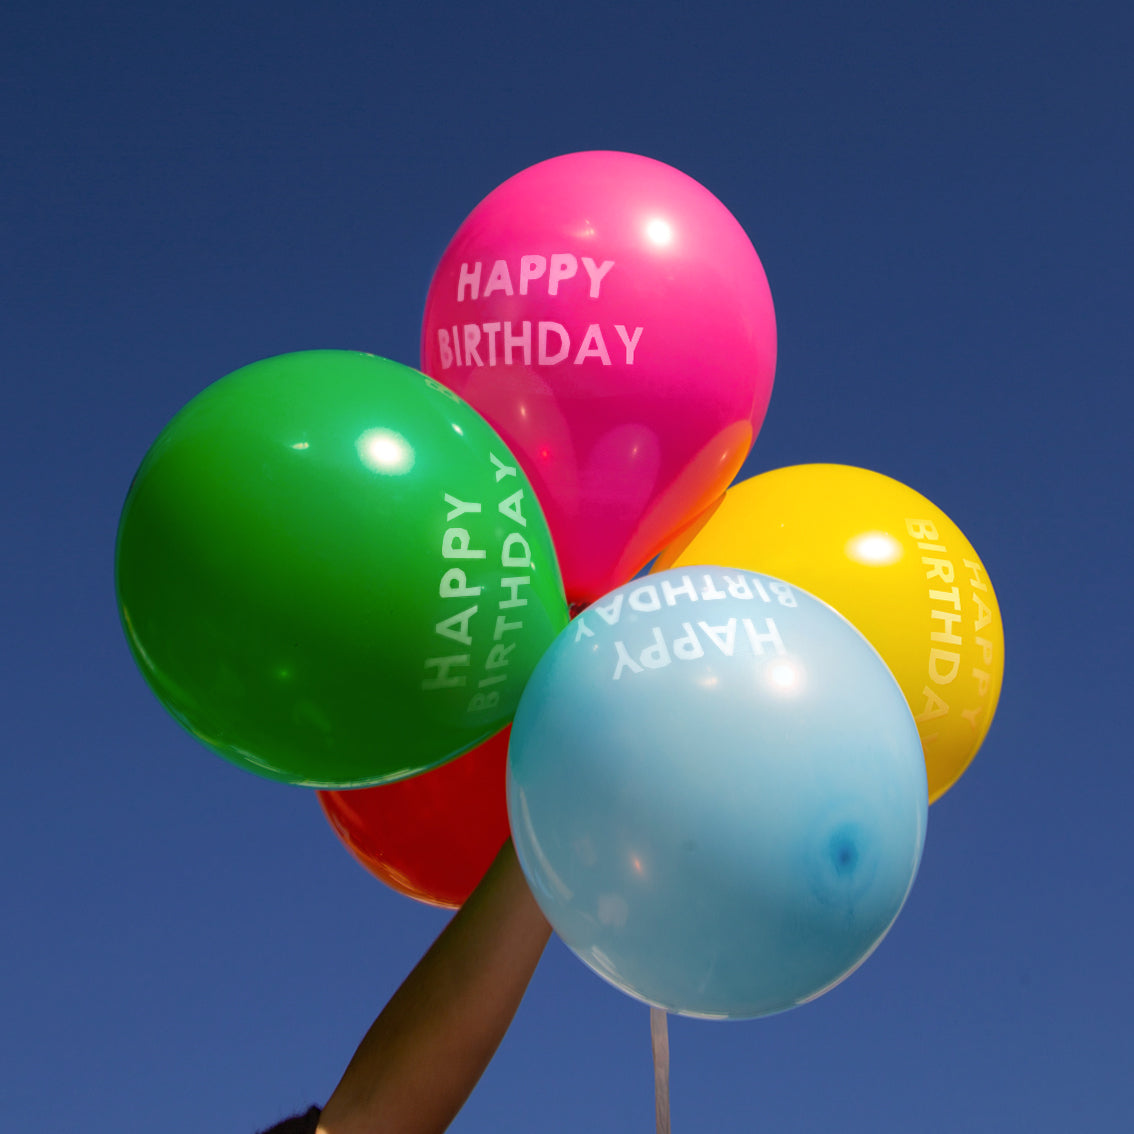 Happy Birthday bright balloons